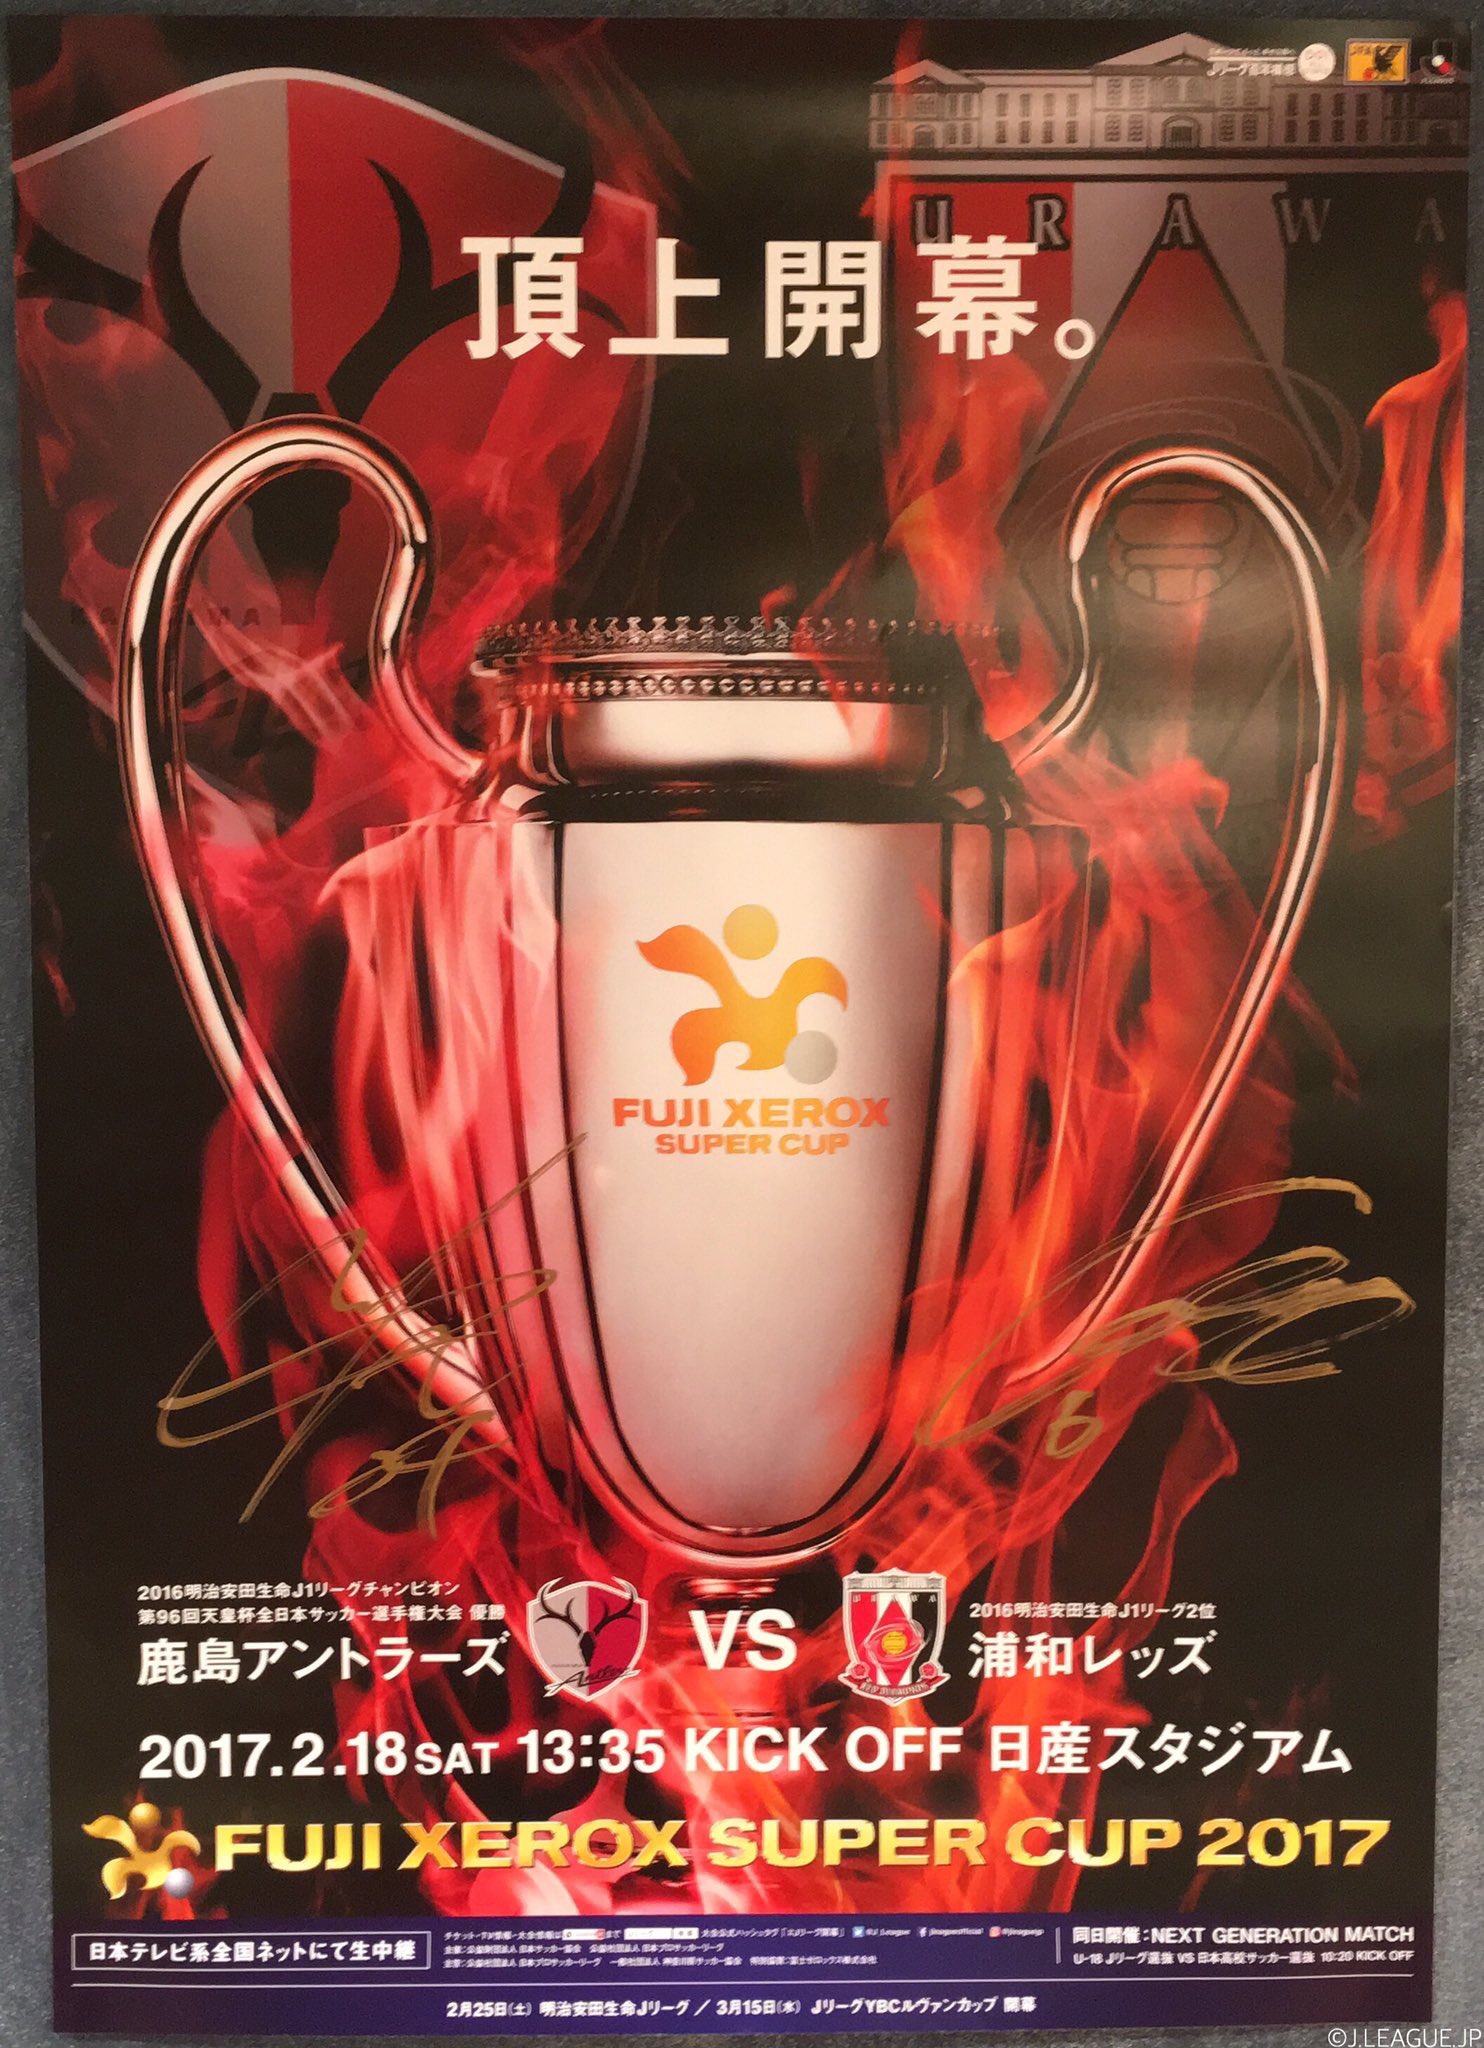 ｊリーグ 日本プロサッカーリーグ 特別プレゼント ｆｕｊｉ ｘｅｒｏｘ ｓｕｐｅｒ ｃｕｐ ２０１７で対戦する 鹿島アントラーズ と 浦和レッズ 両クラブを代表して伊東選手と遠藤選手の 直筆サイン入りポスター を2名様にプレゼント